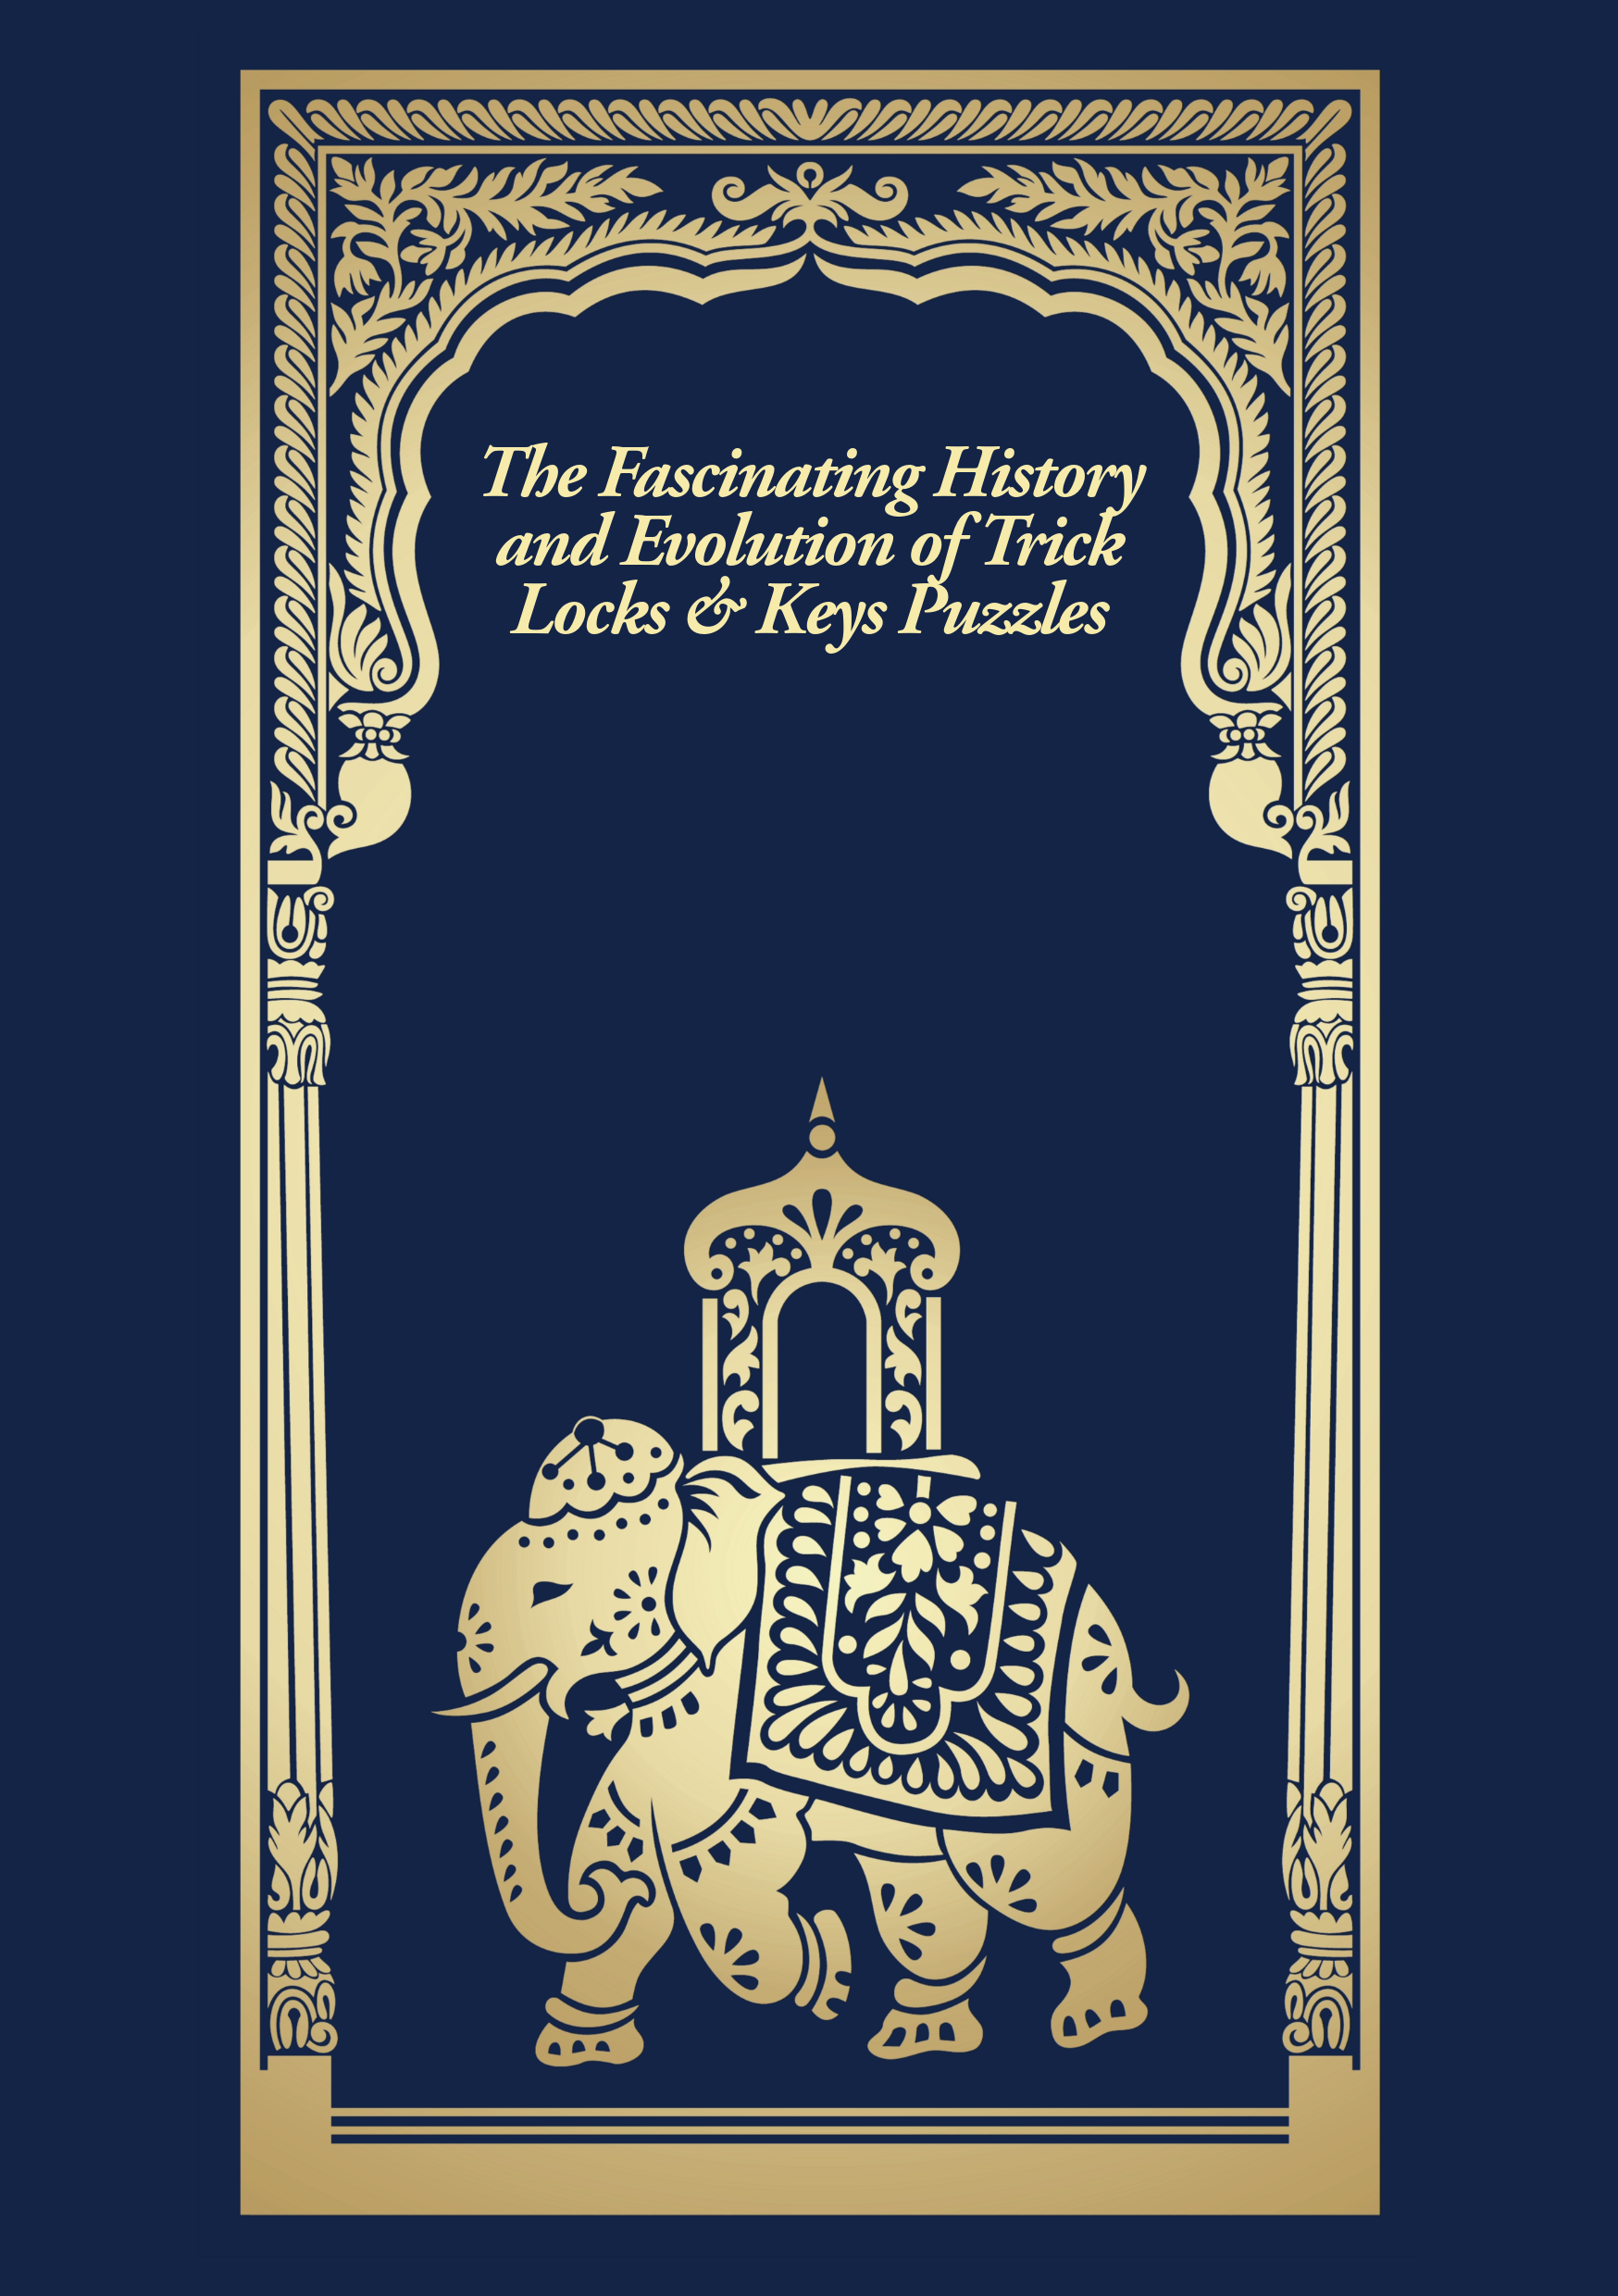 History of Keys and Locks